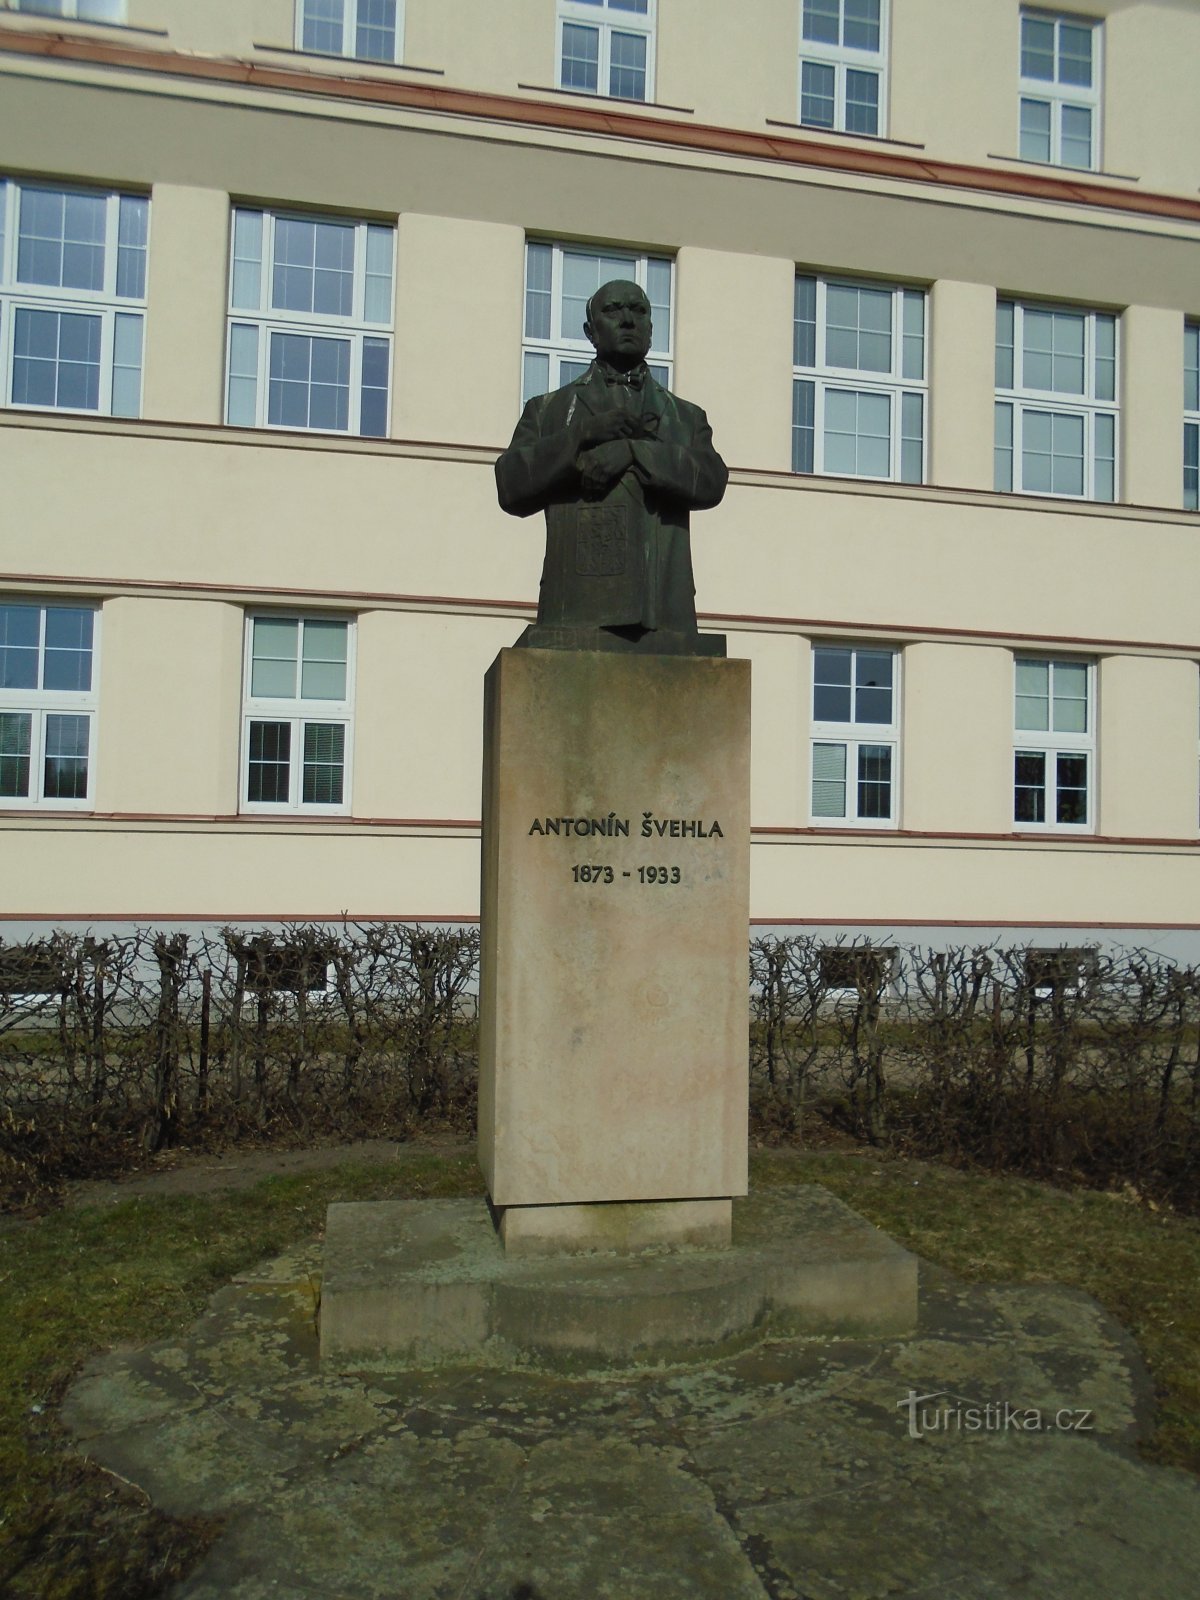 Đài tưởng niệm Antonín Švehla (Hradec Králové, ngày 4.3.2018 tháng XNUMX năm XNUMX)